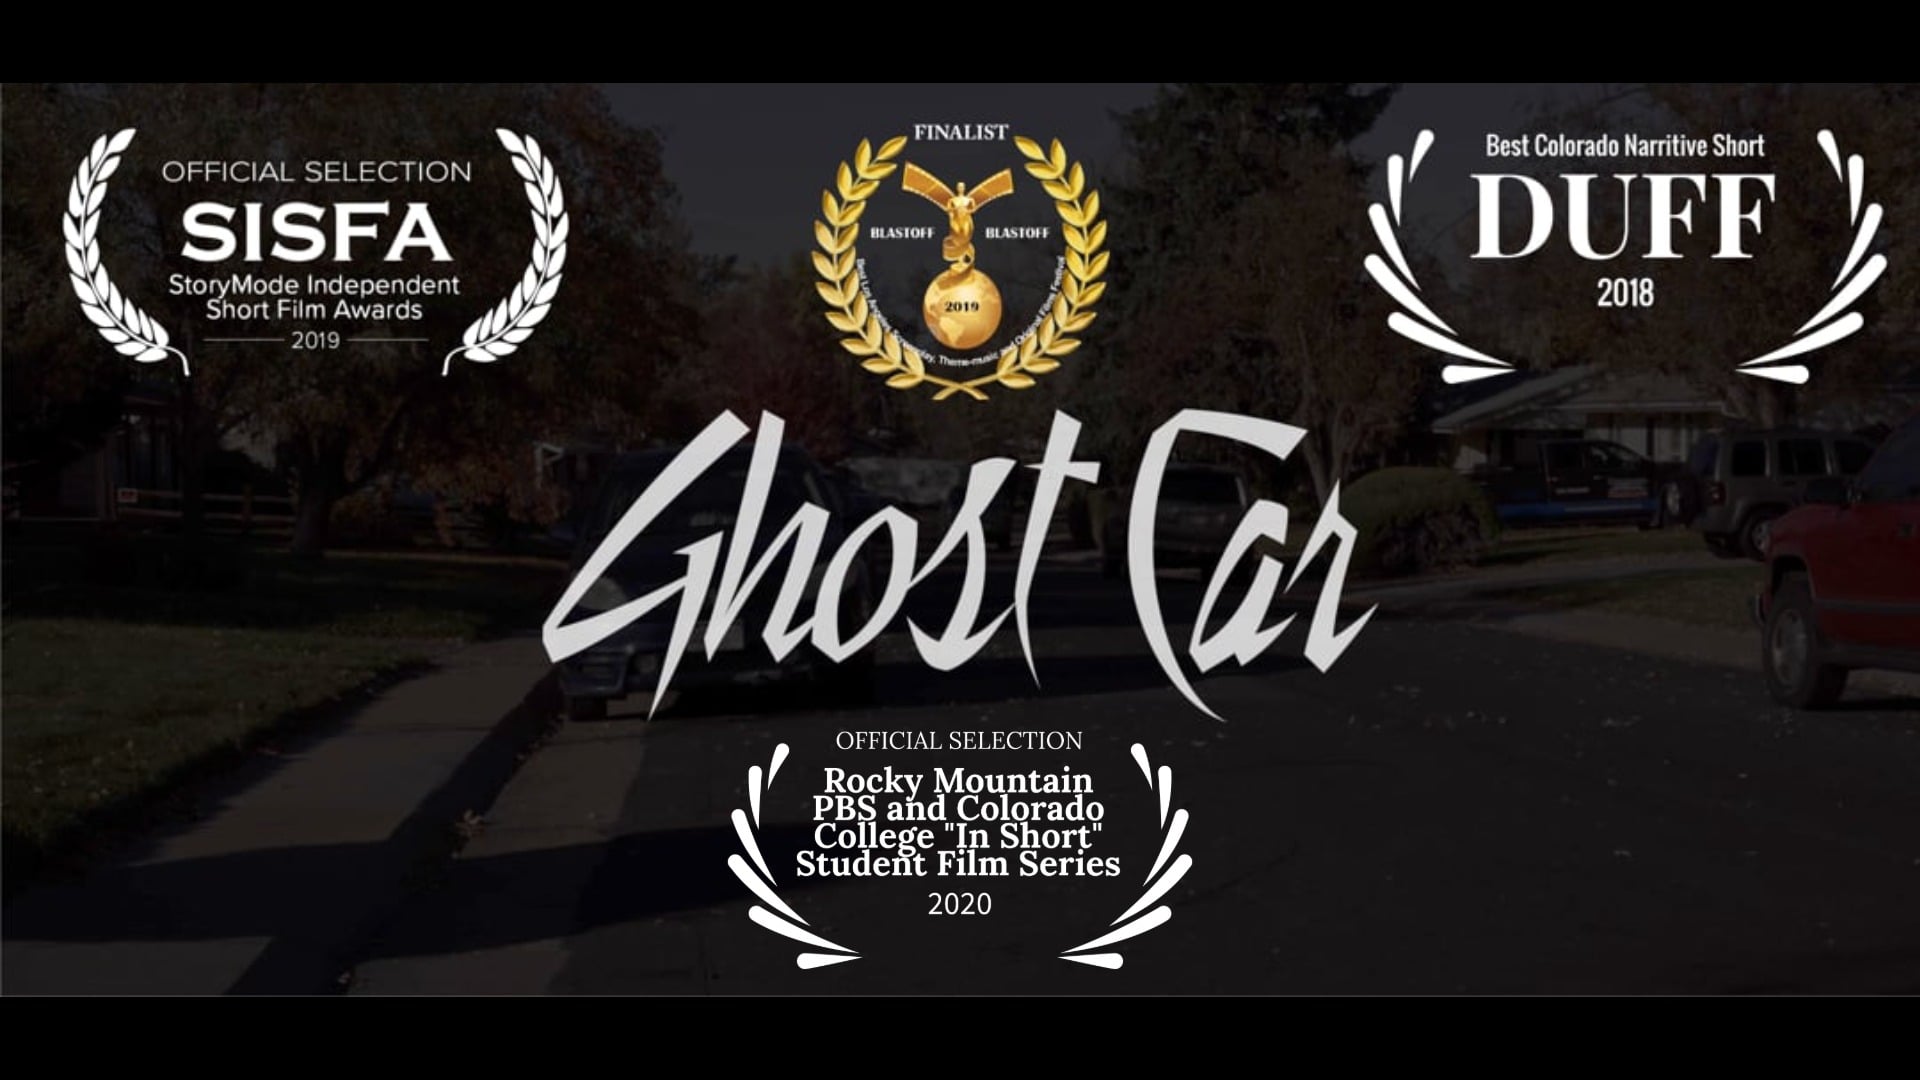 Ghost Car